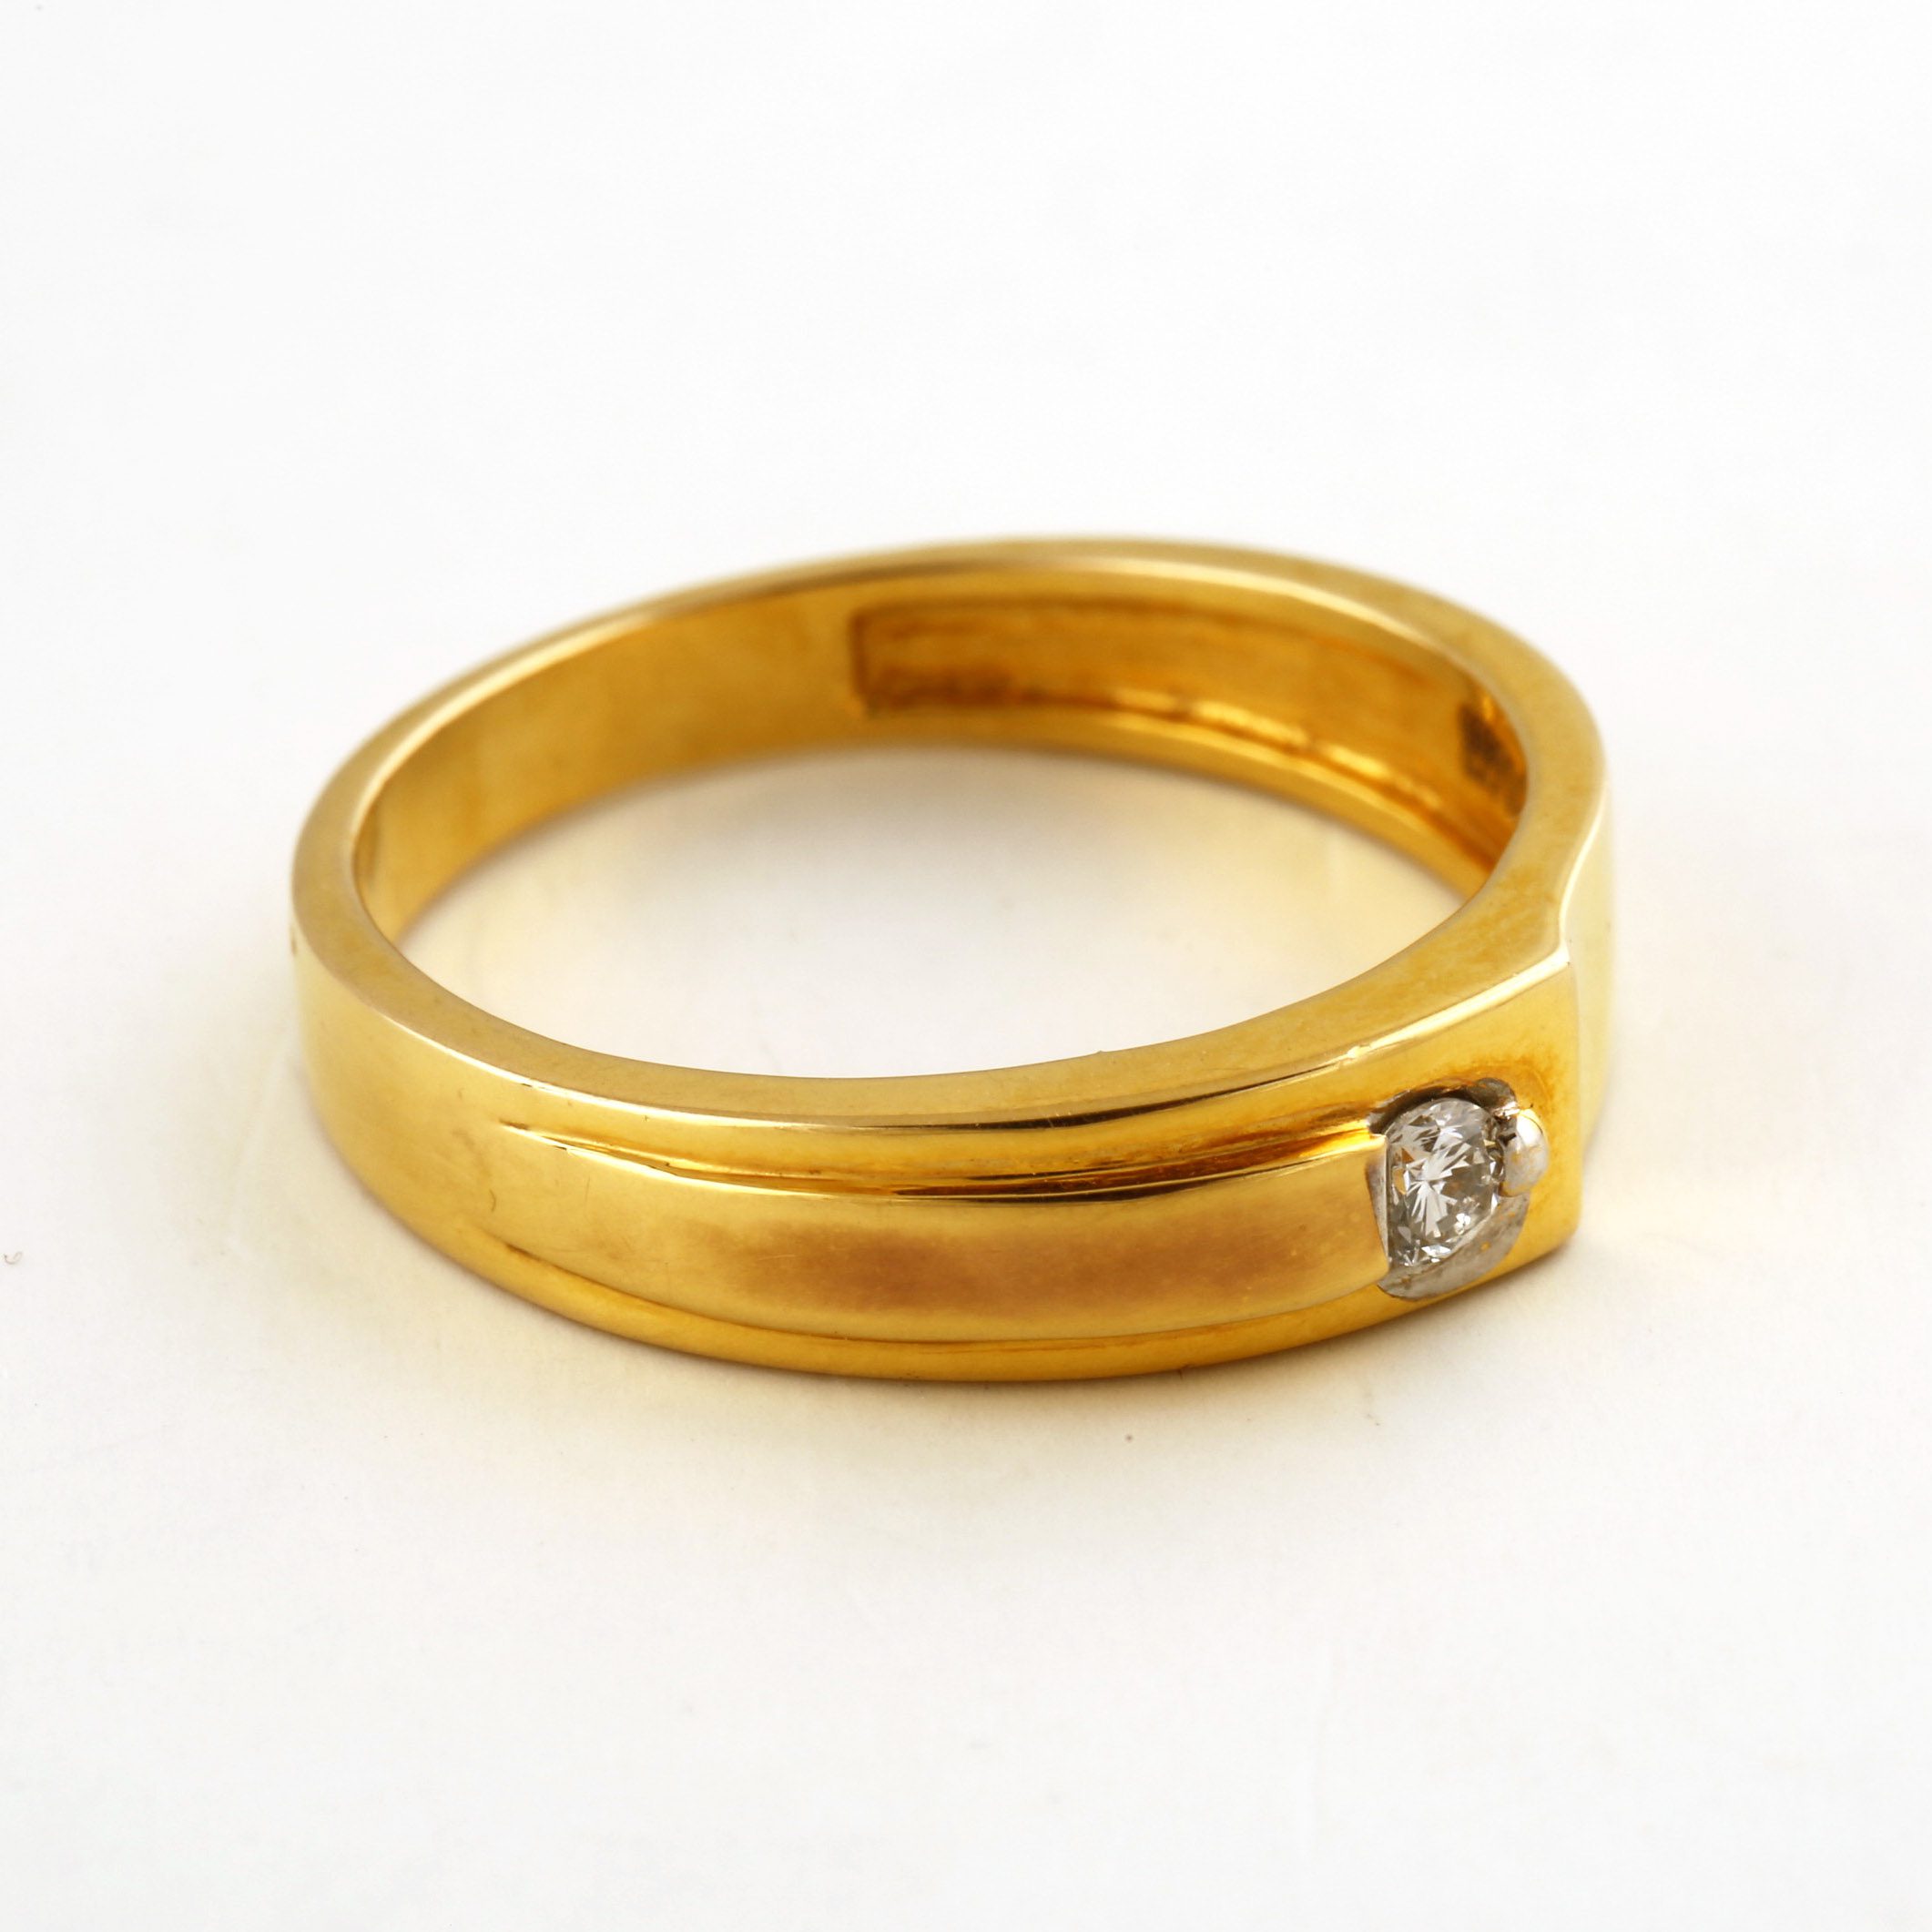 Buy quality 22K Gold Fancy Ring MGA - LRG0007 in Amreli